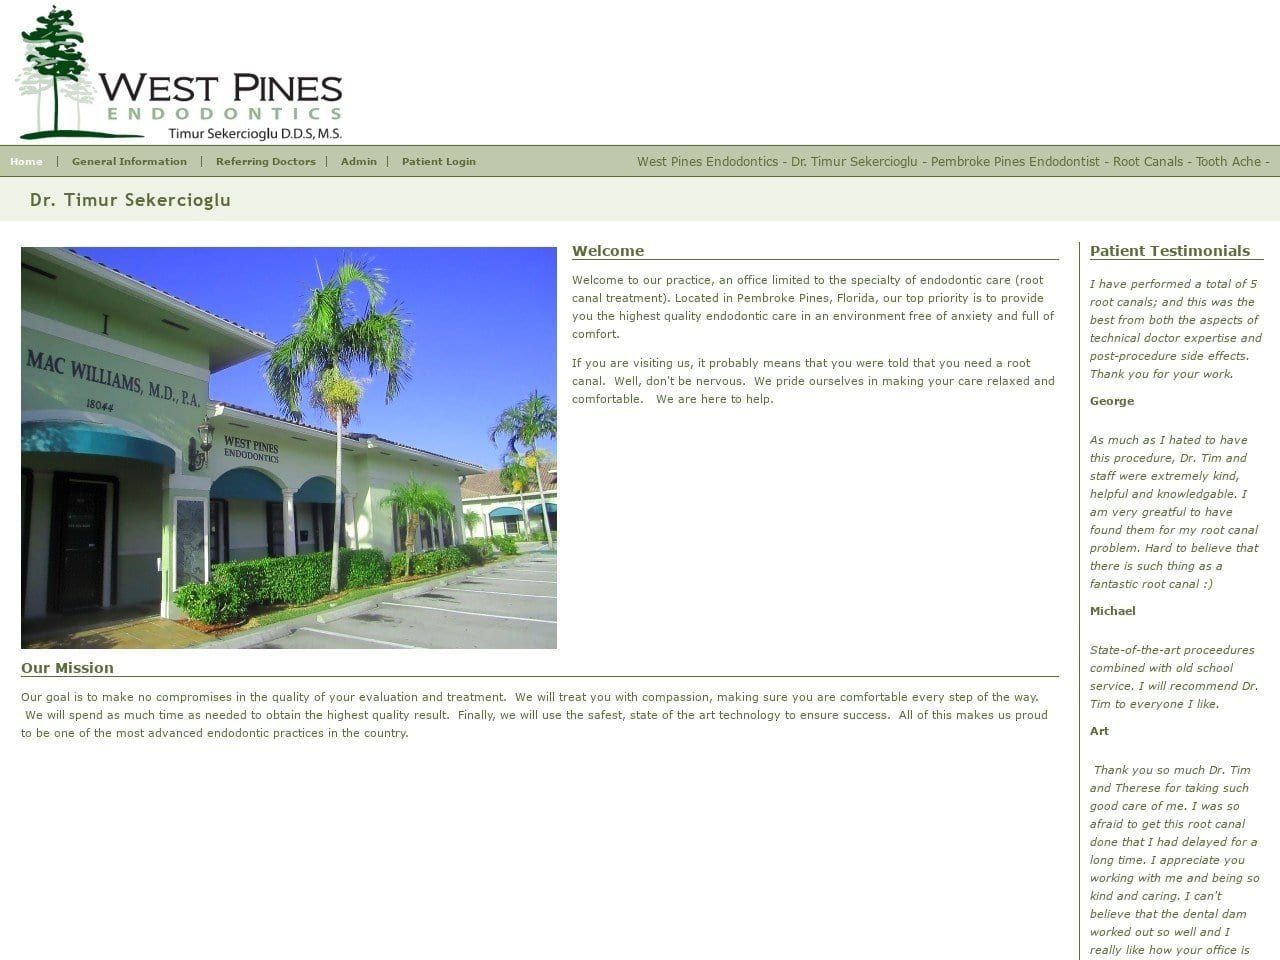 West Pines Endodontics Website Screenshot from westpinesendo.com